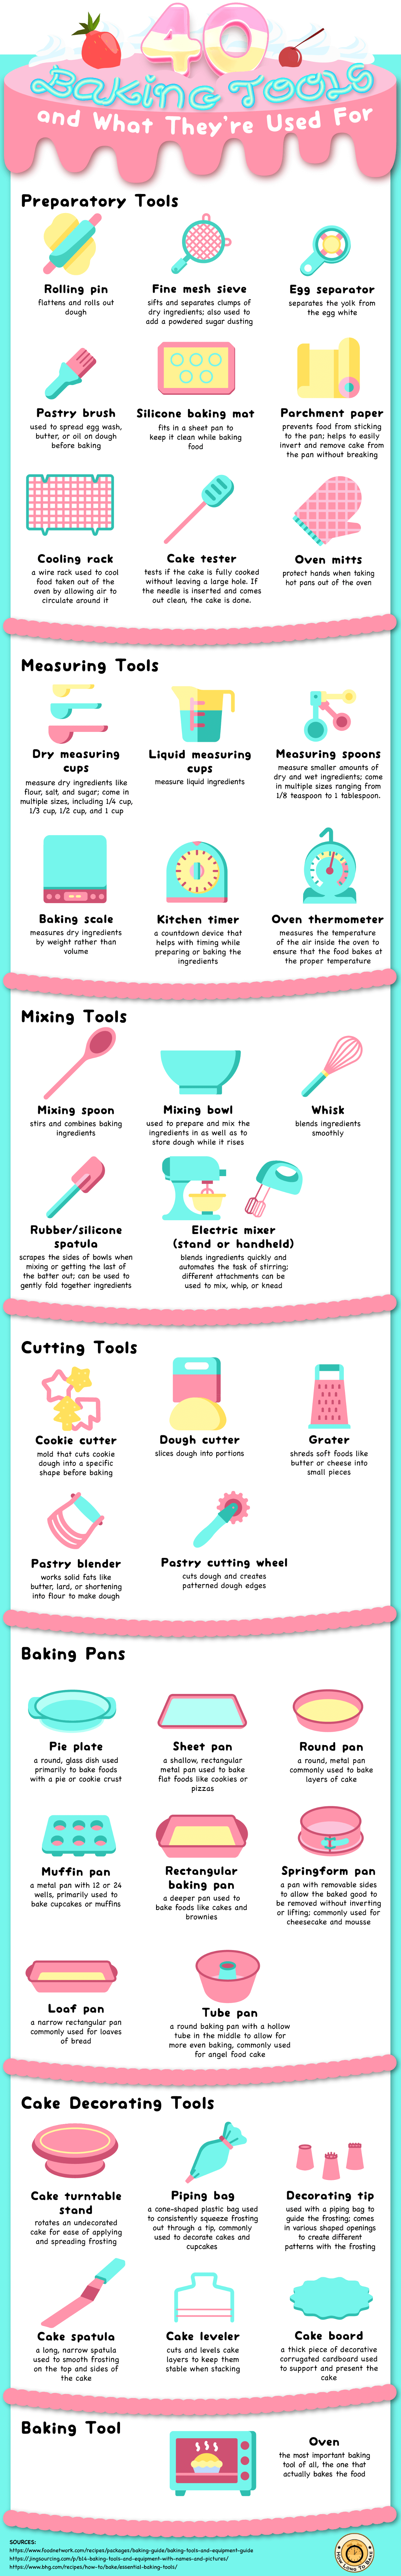 baking tools